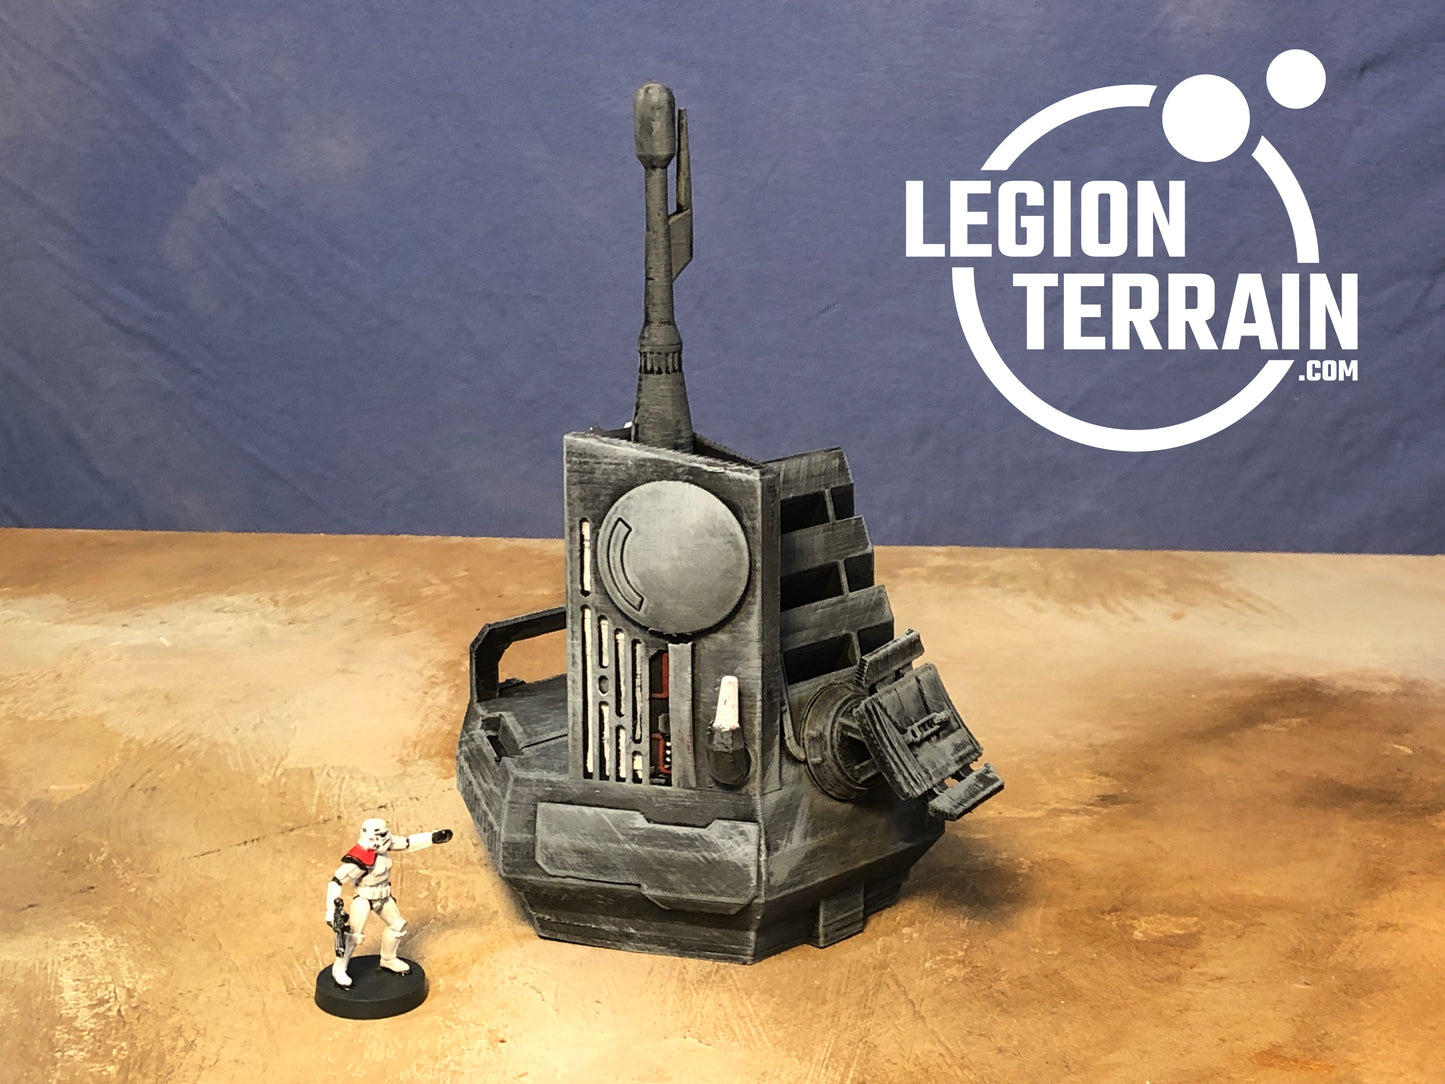 LegionTower Com-Tower - LegionTerrain